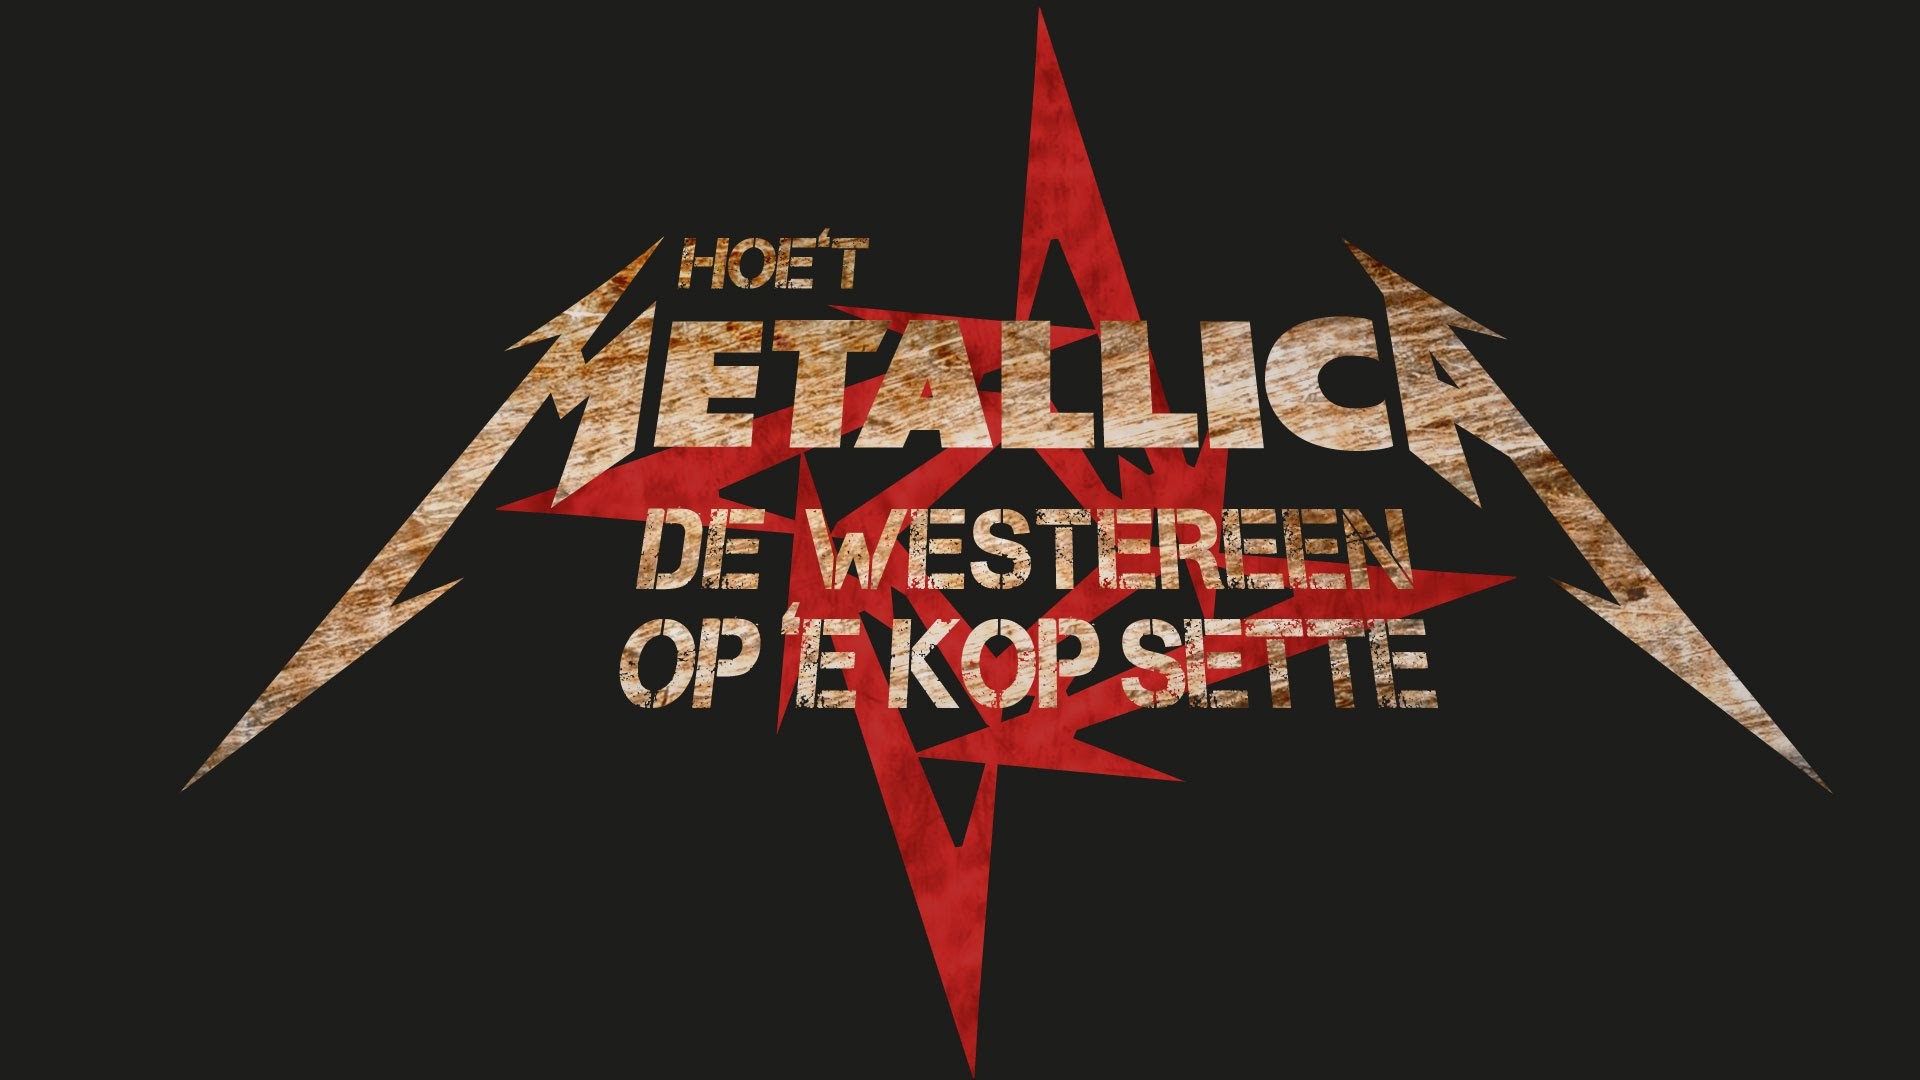 Metallica Nashville poster